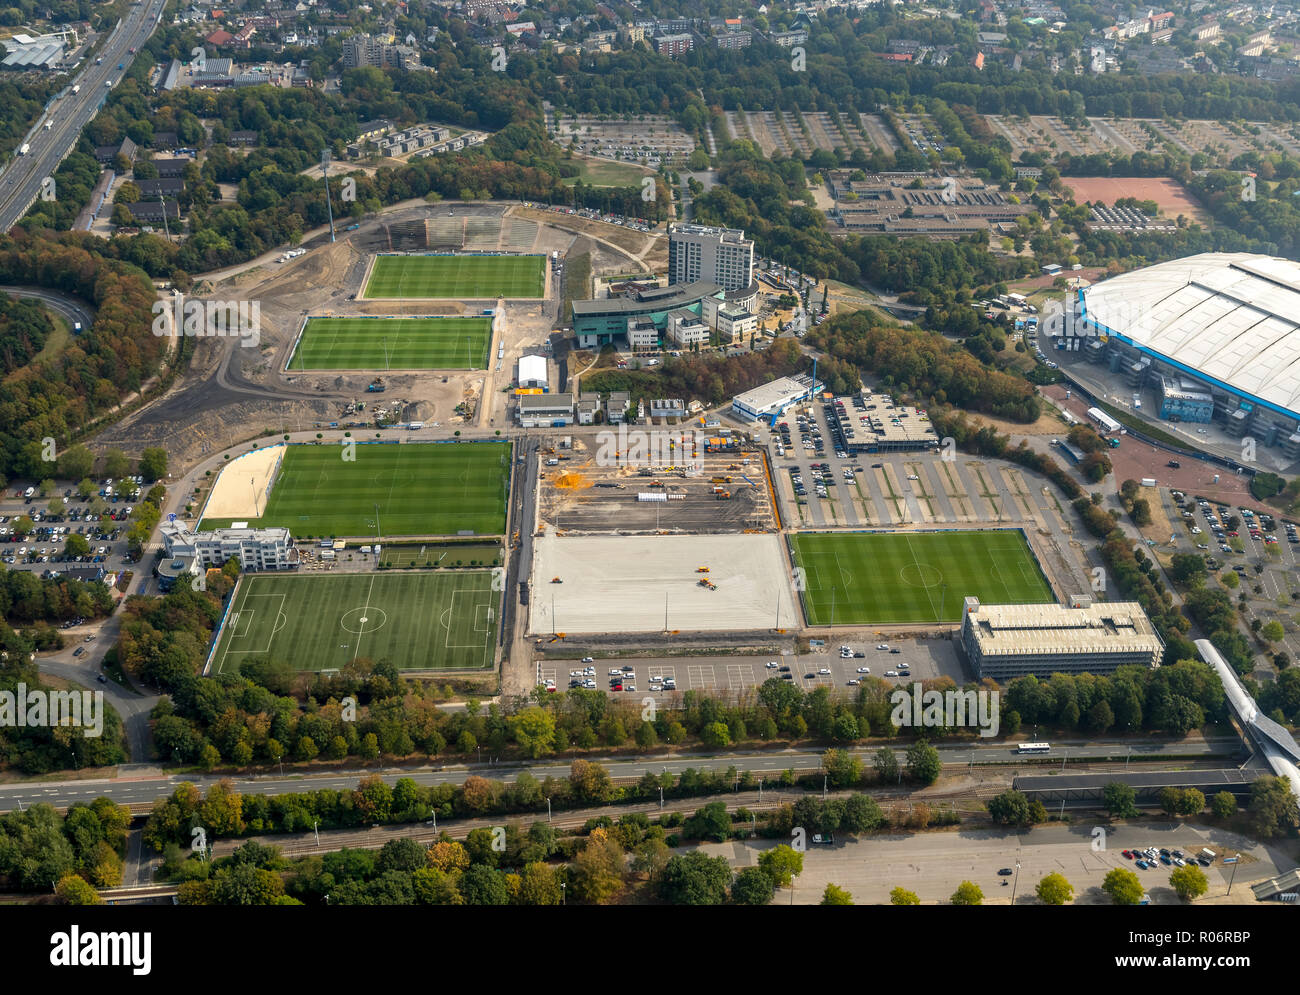 Aerial view, new training areas on the Schalke area, FC Schalke 04, Veltins Arena, Arena on Schalke, Bundesliga club, medicos.Aufschalke GmbH, convers Stock Photo